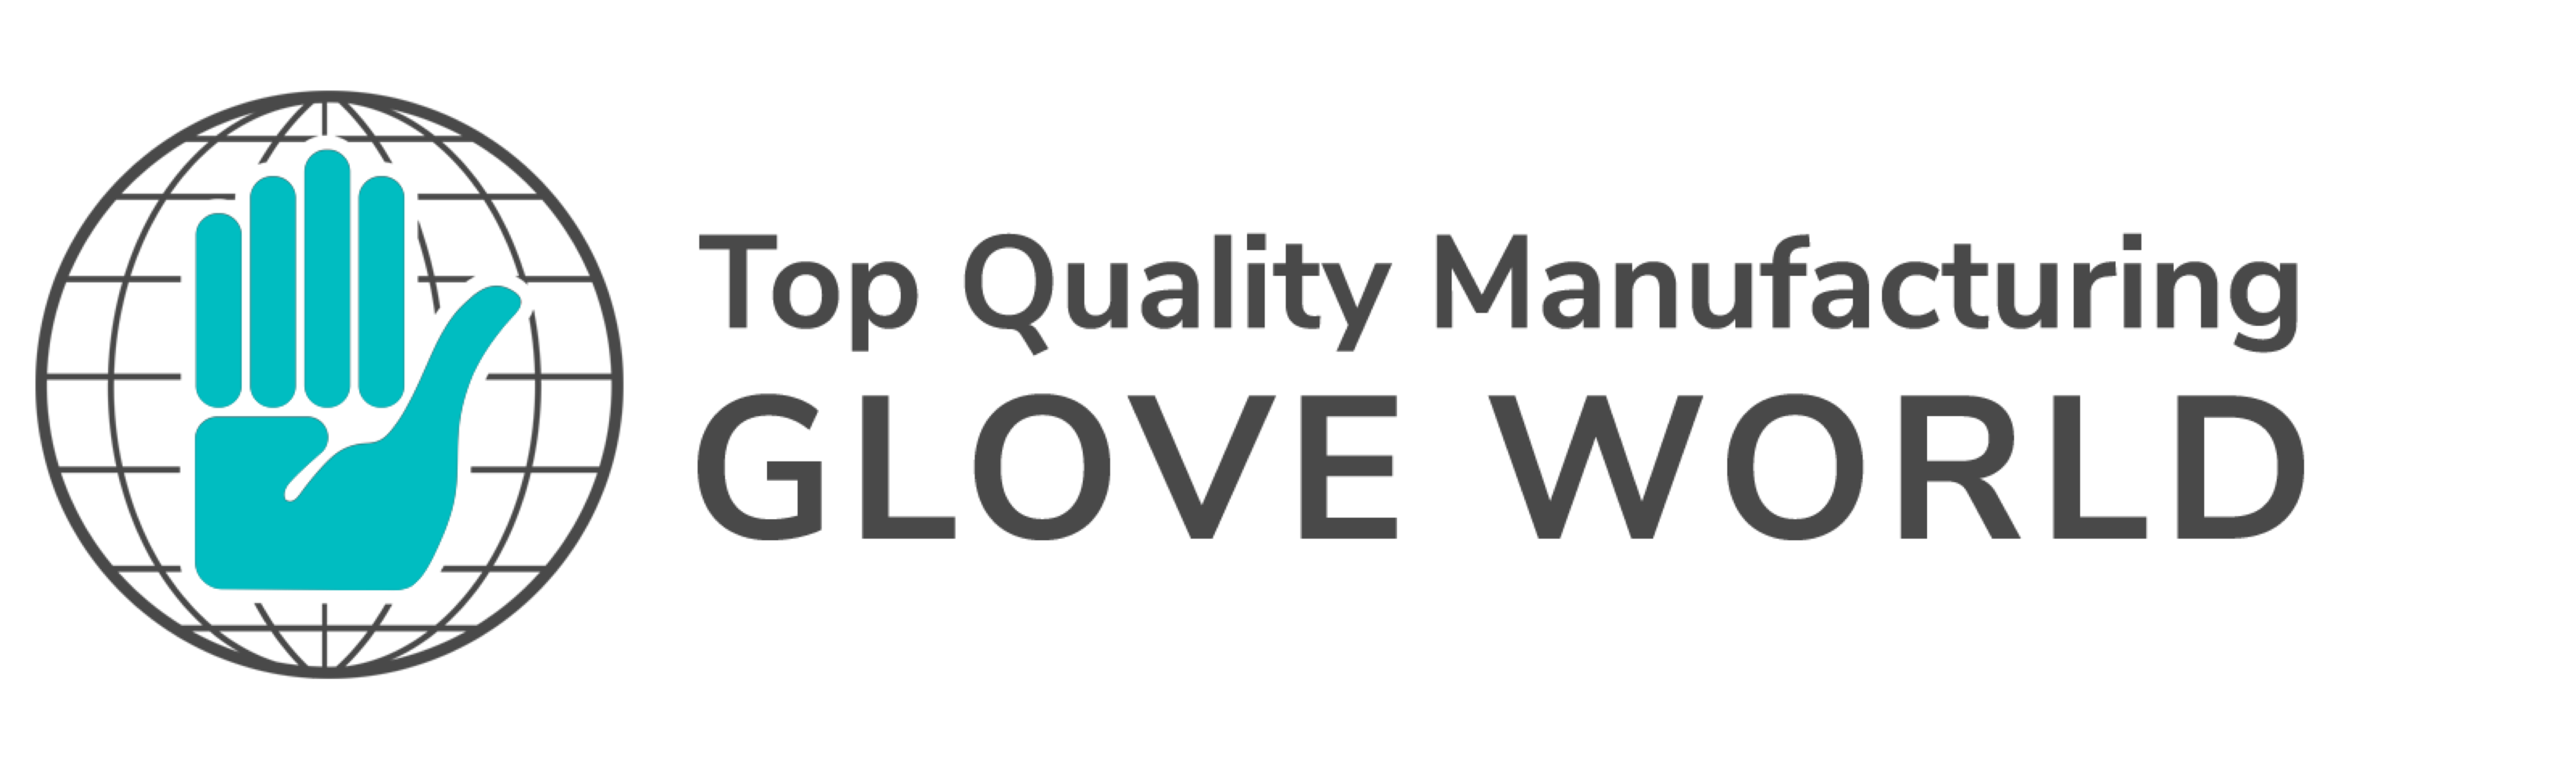 Top Quality Manufacturing Glove World logo